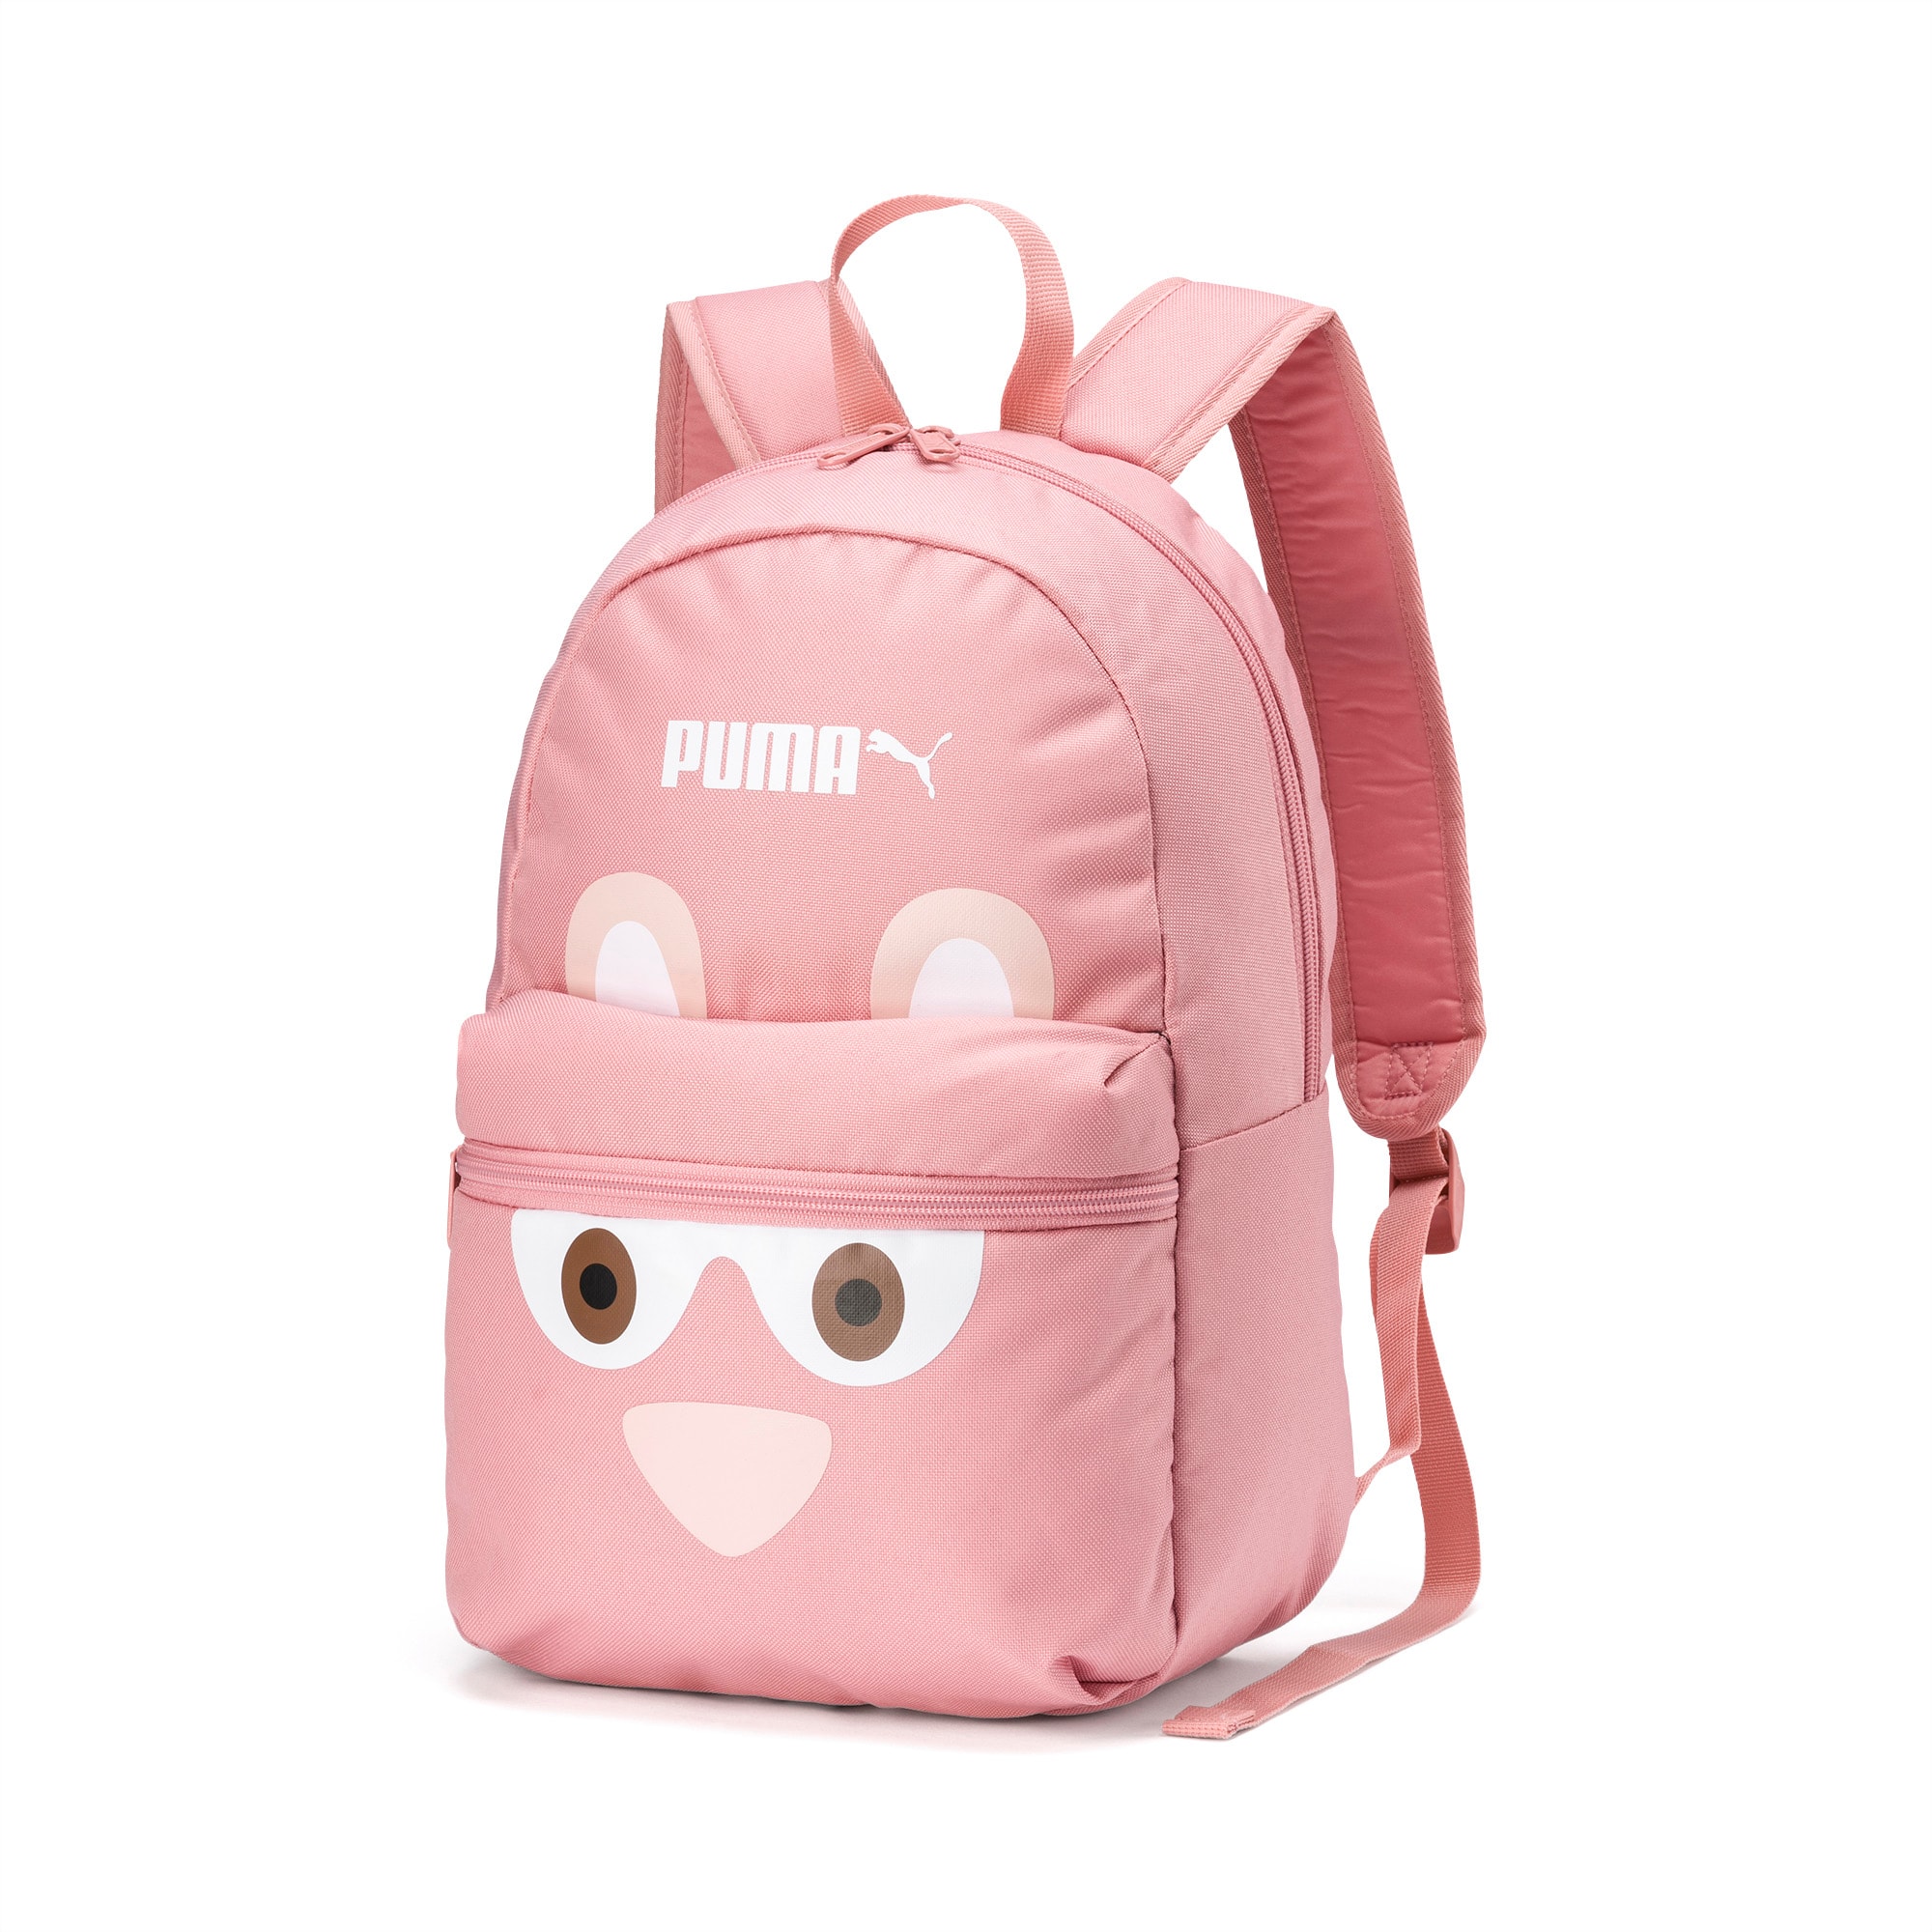 puma monster backpack